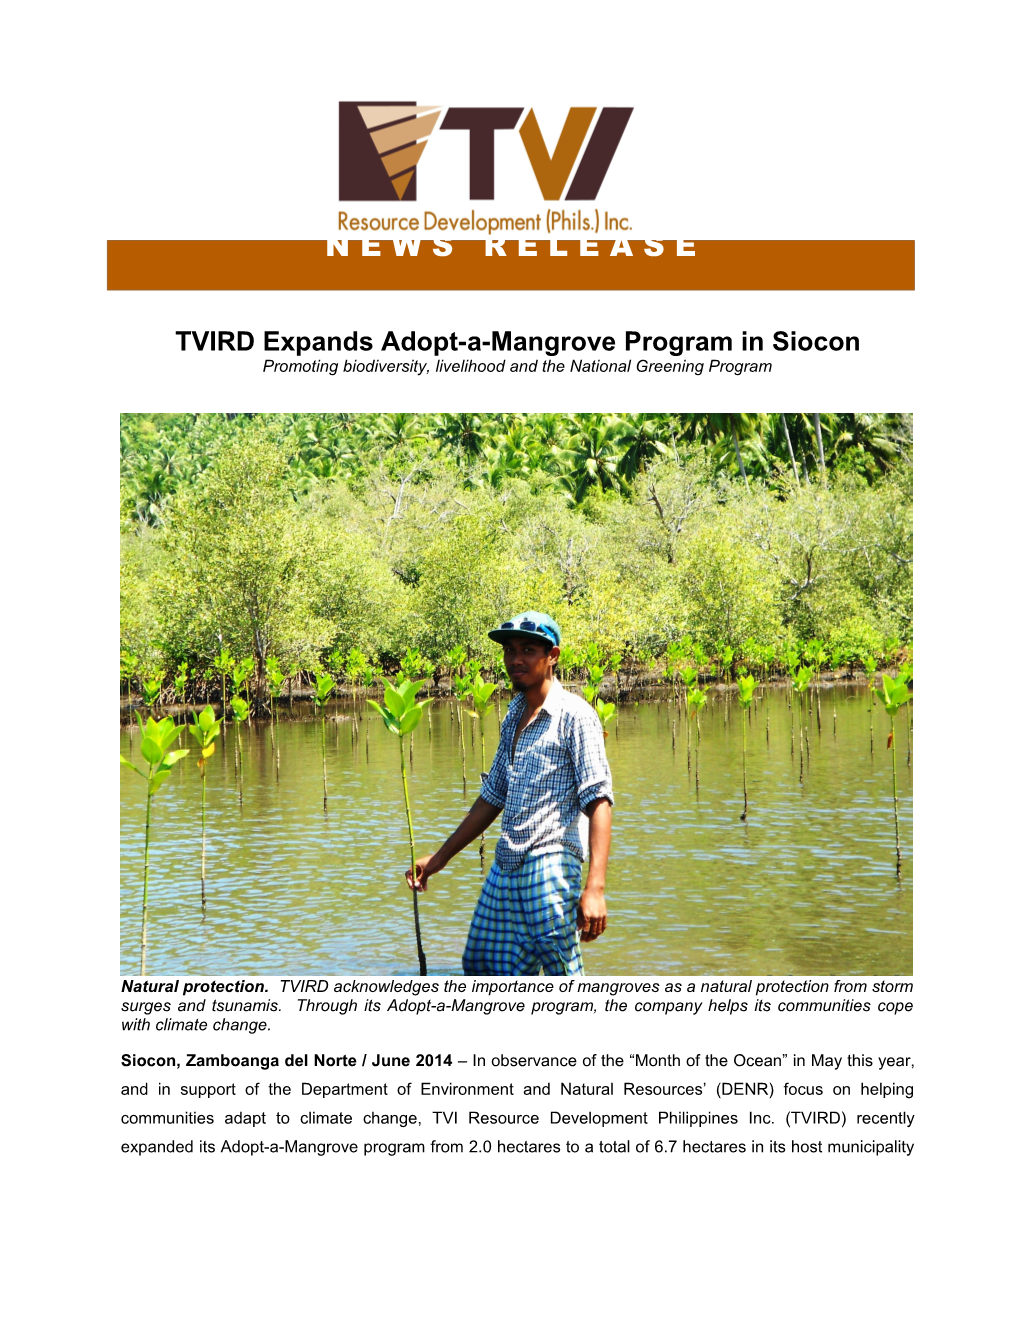 TVIRD Expandsadopt-A-Mangrove Program in Siocon